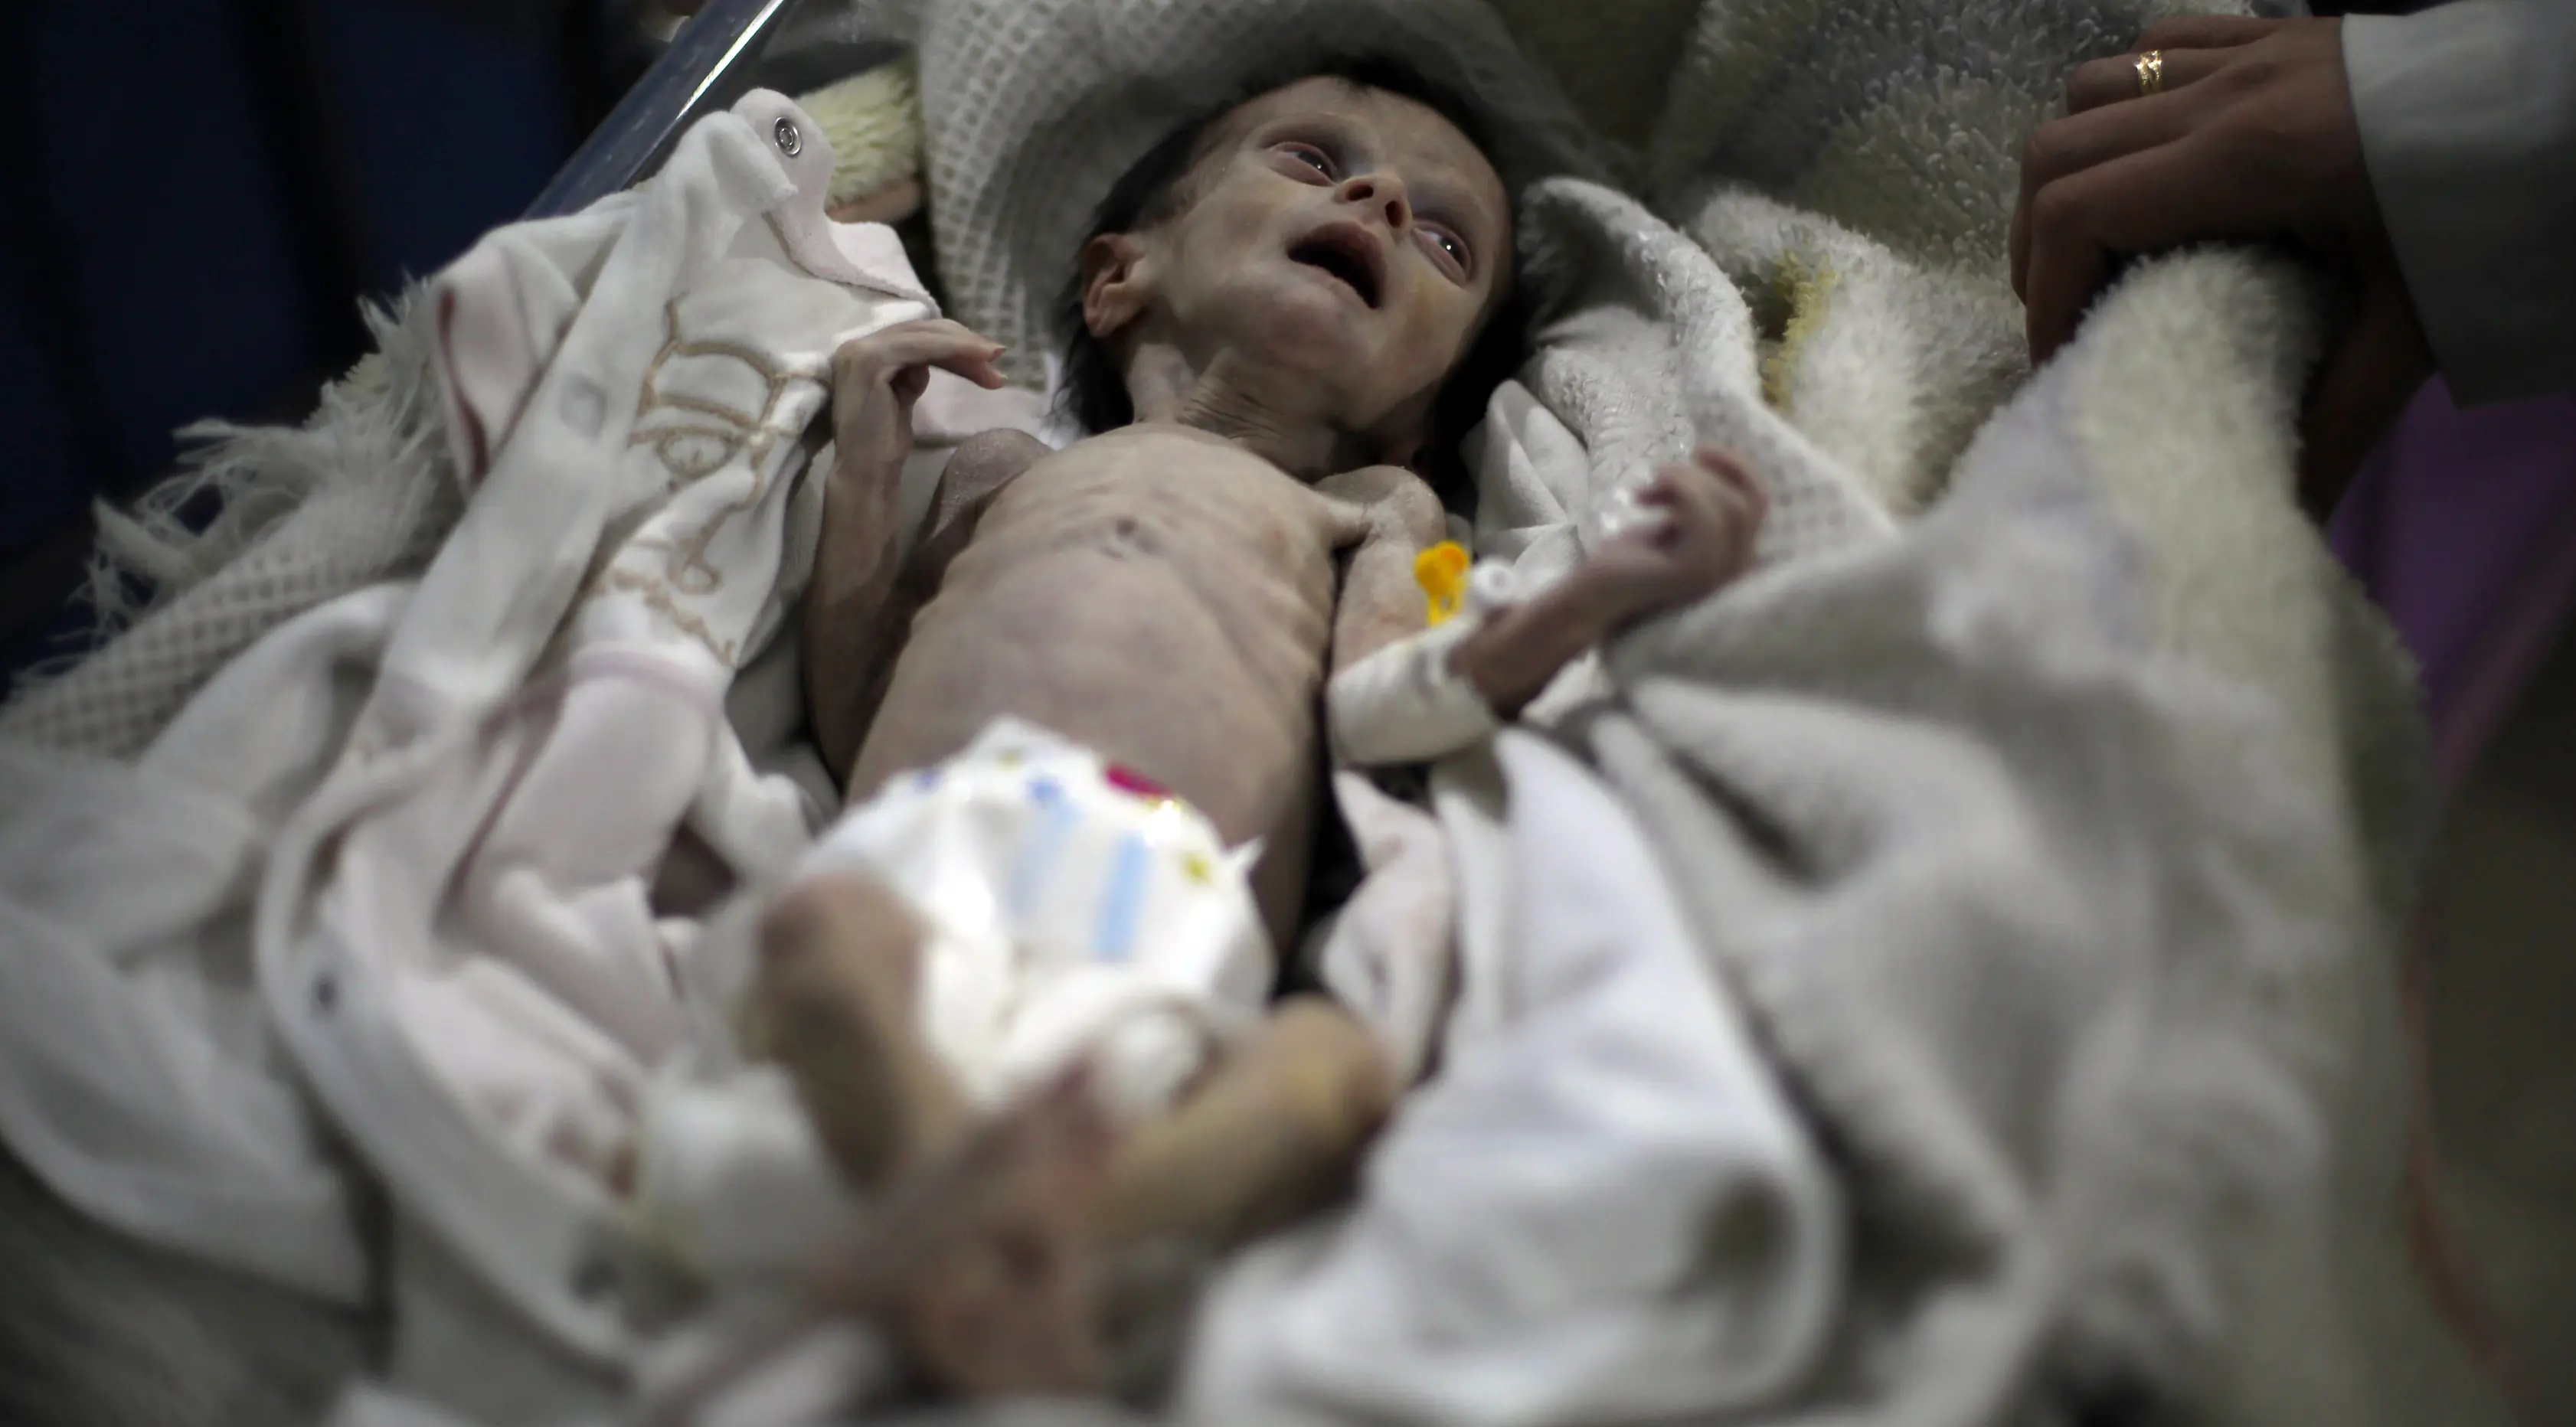 Sahar Dofdaa, bayi Suriah yang menderita kekurangan gizi parah di sebuah klinik pinggiran kota Damaskus, yang dikuasai oposisi, 21 Oktober 2017. Ibu bayi perempuan itu mengalami kekurangan gizi akut sehingga sulit untuk menyusui. (Amer ALMOHIBANY/AFP)